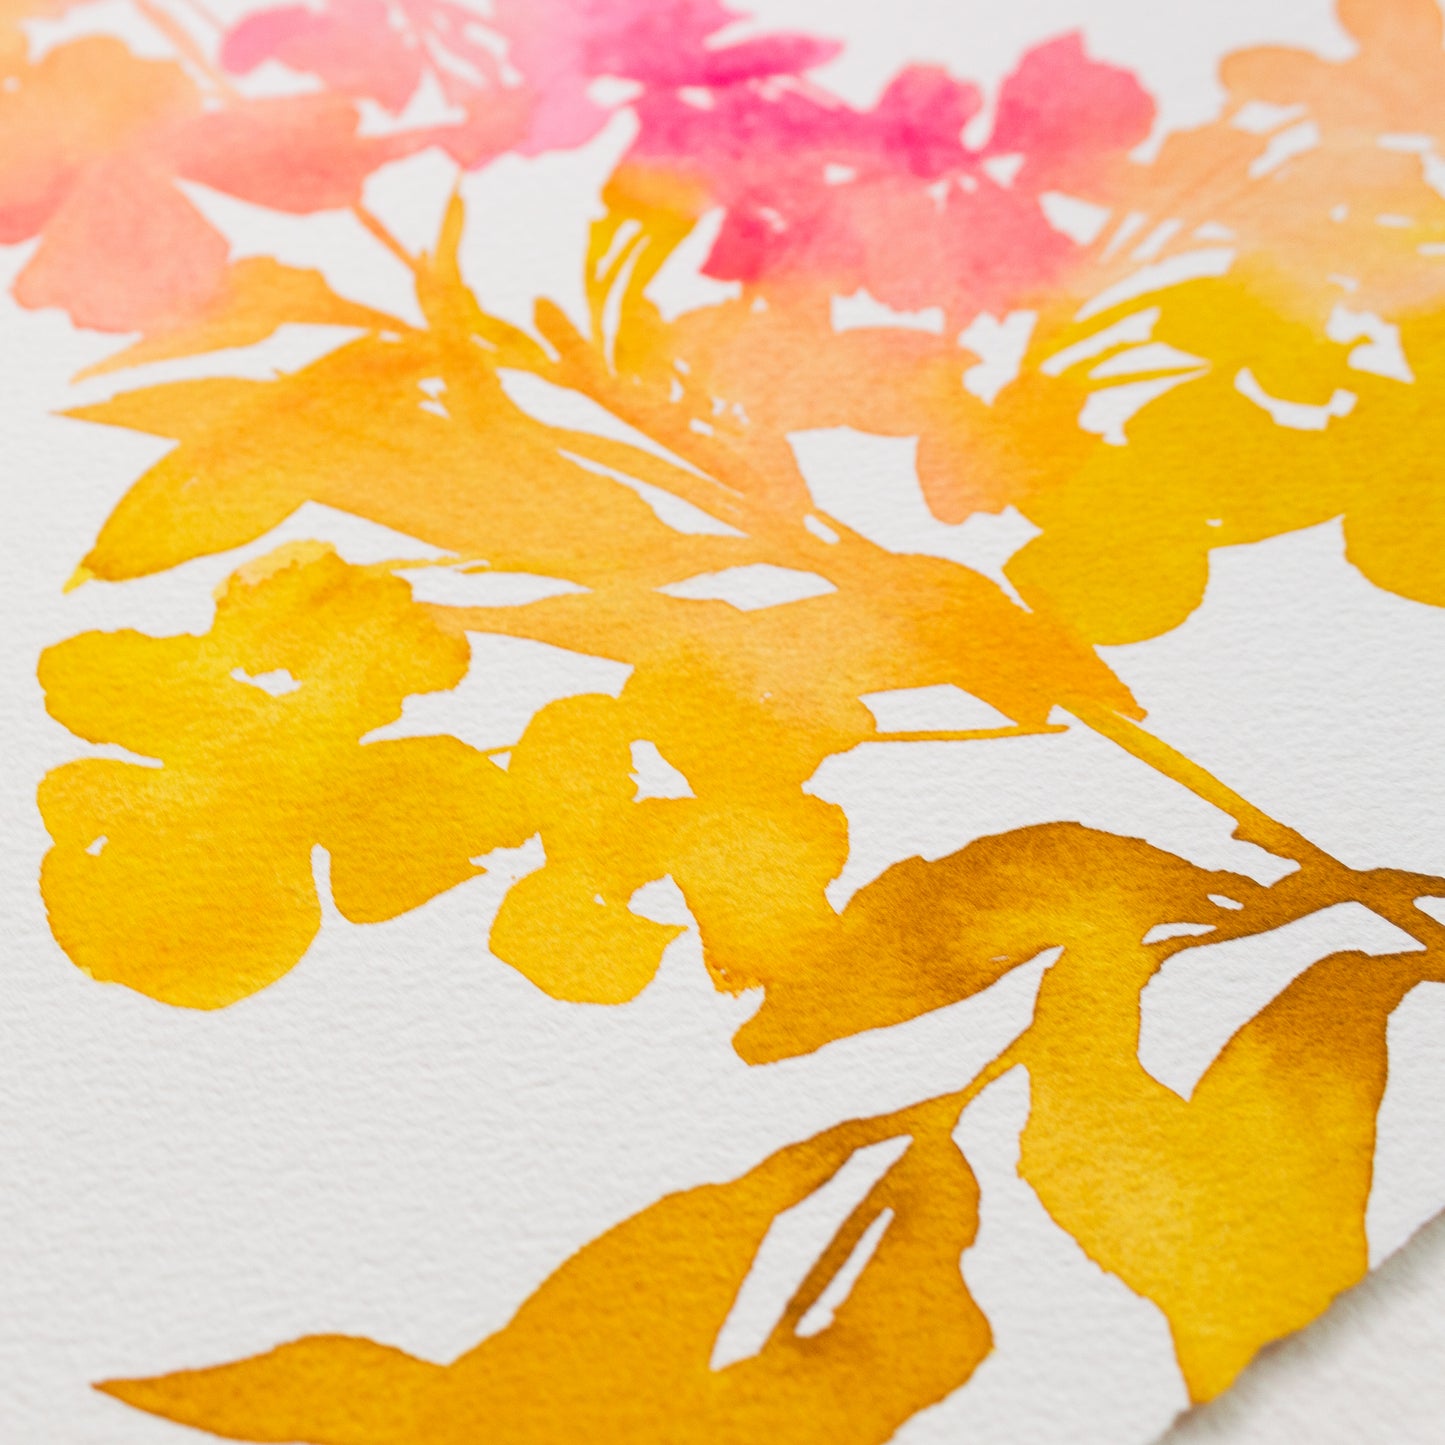 "Pink & Marigold Yellow Wildflower Burst" Print